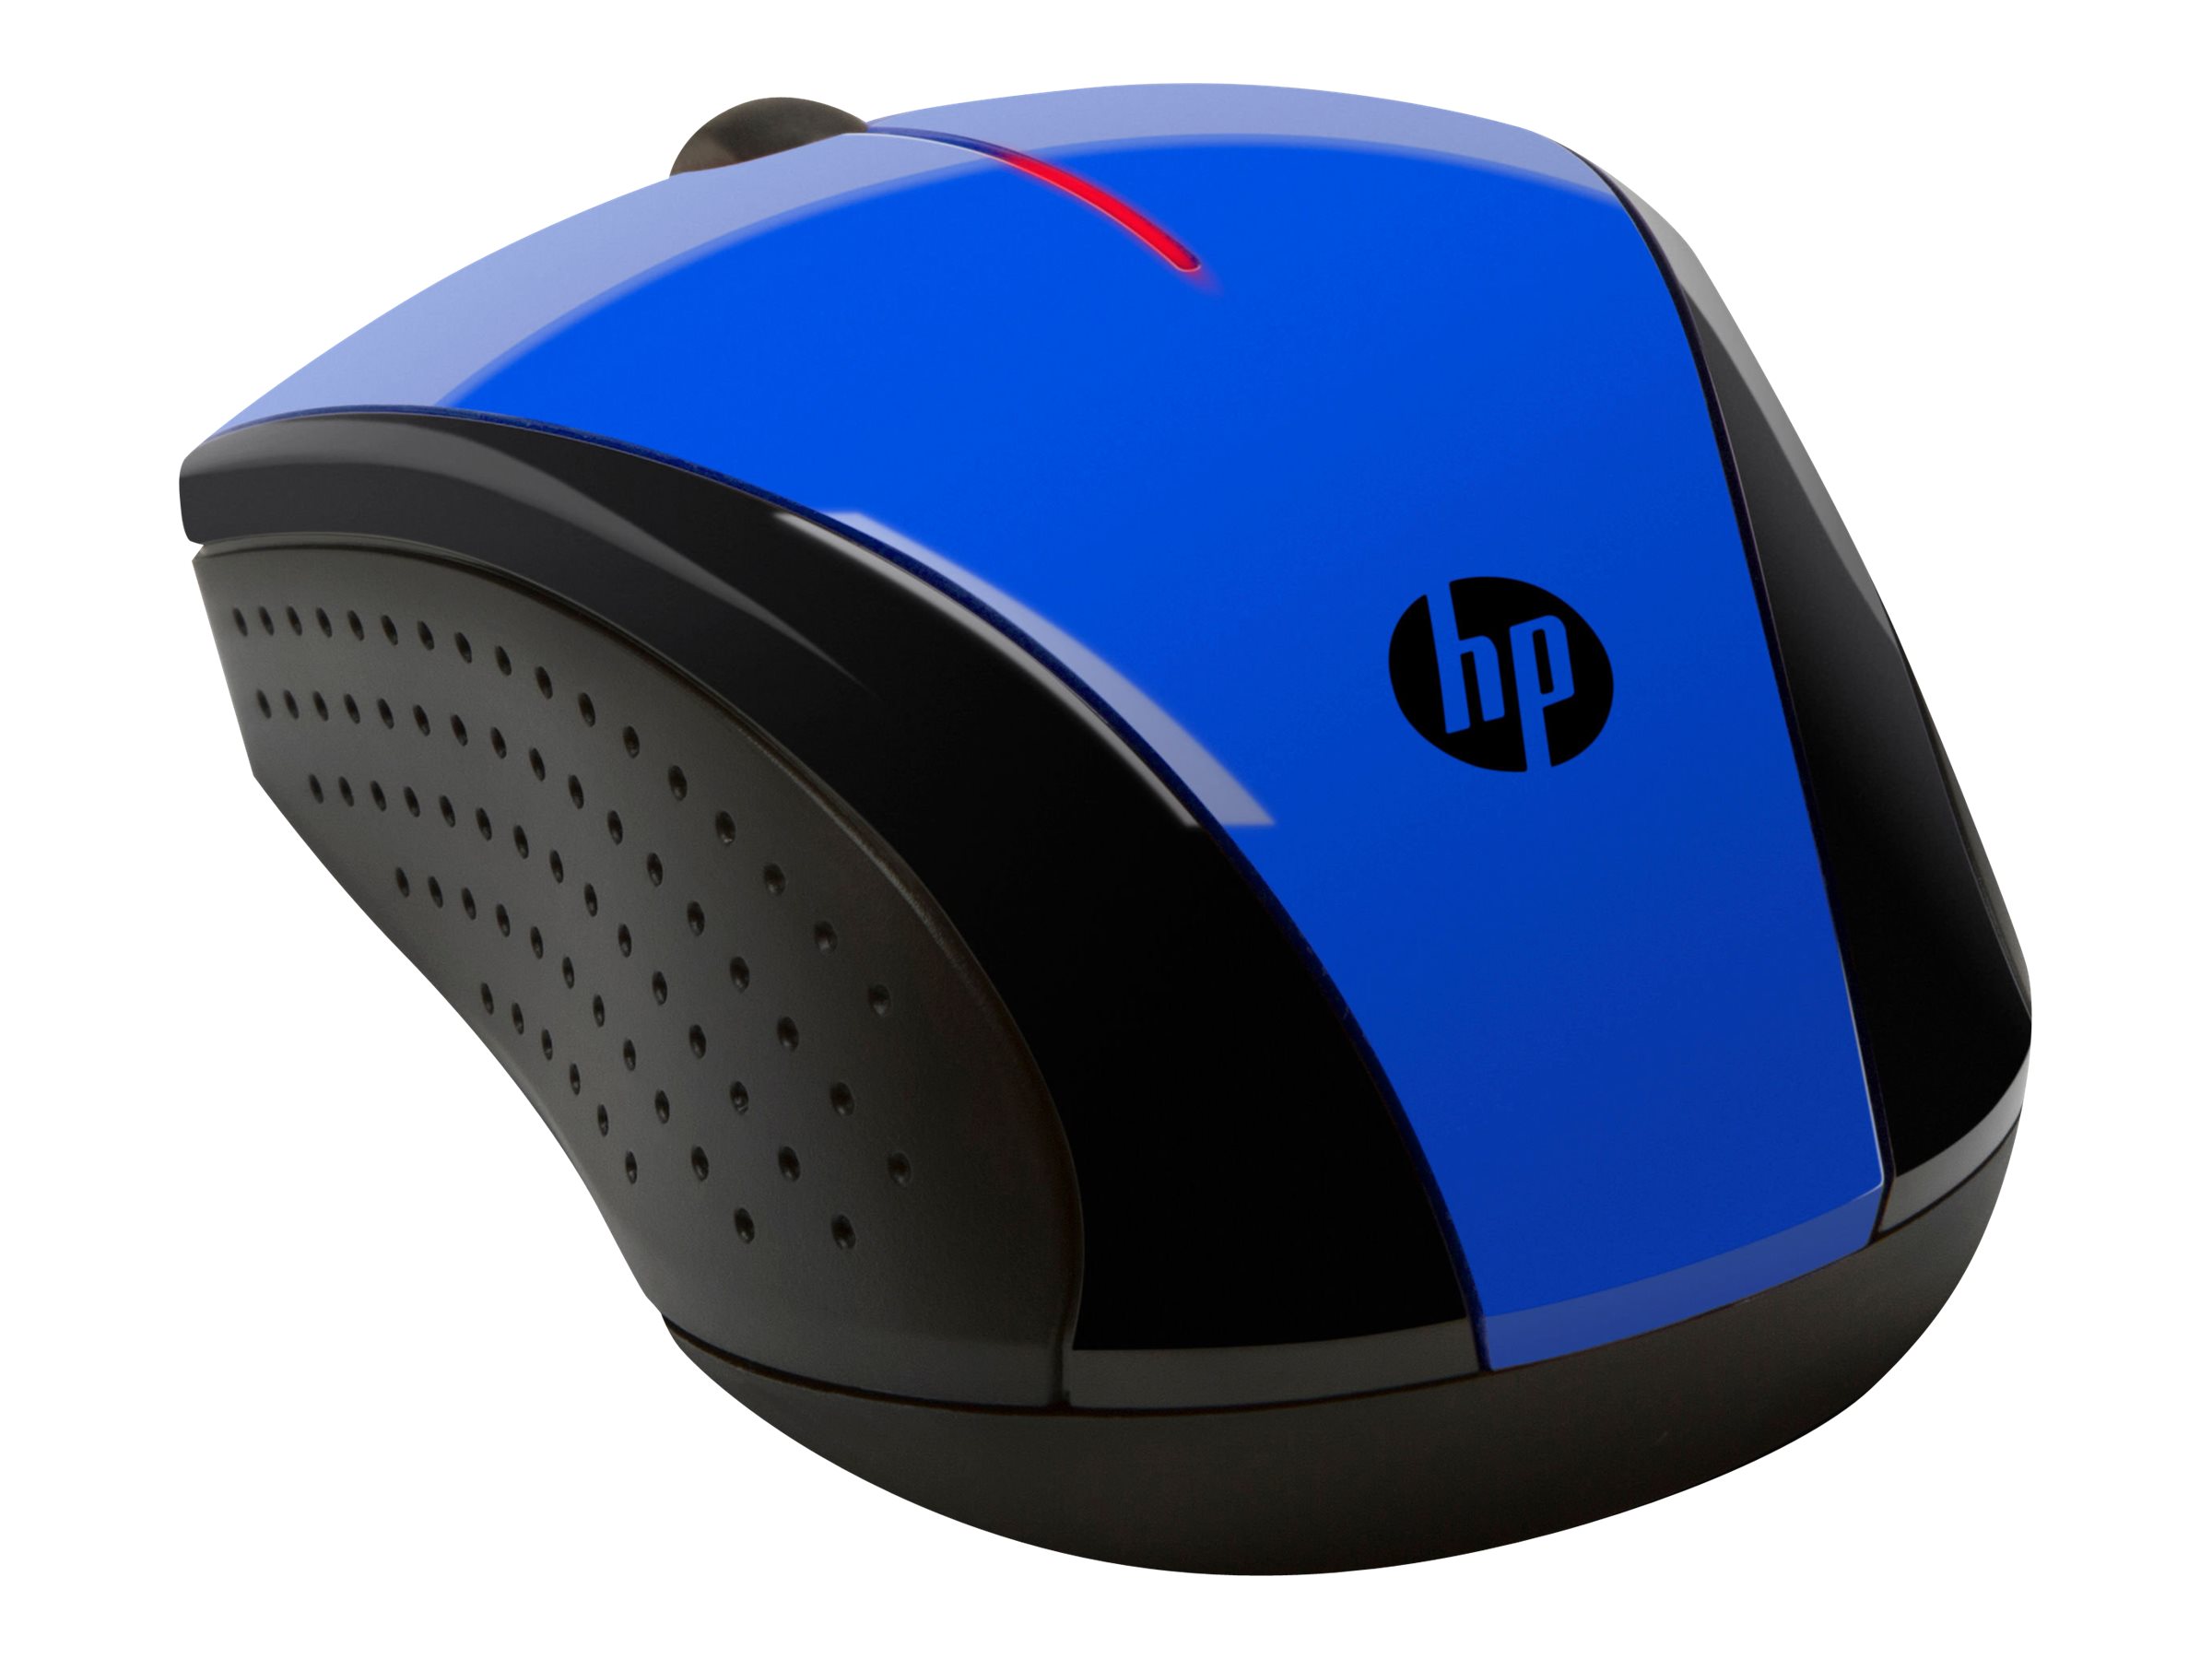 wedstrijd Nebu als HP X3000 - Mouse - optical | www.shidirect.com